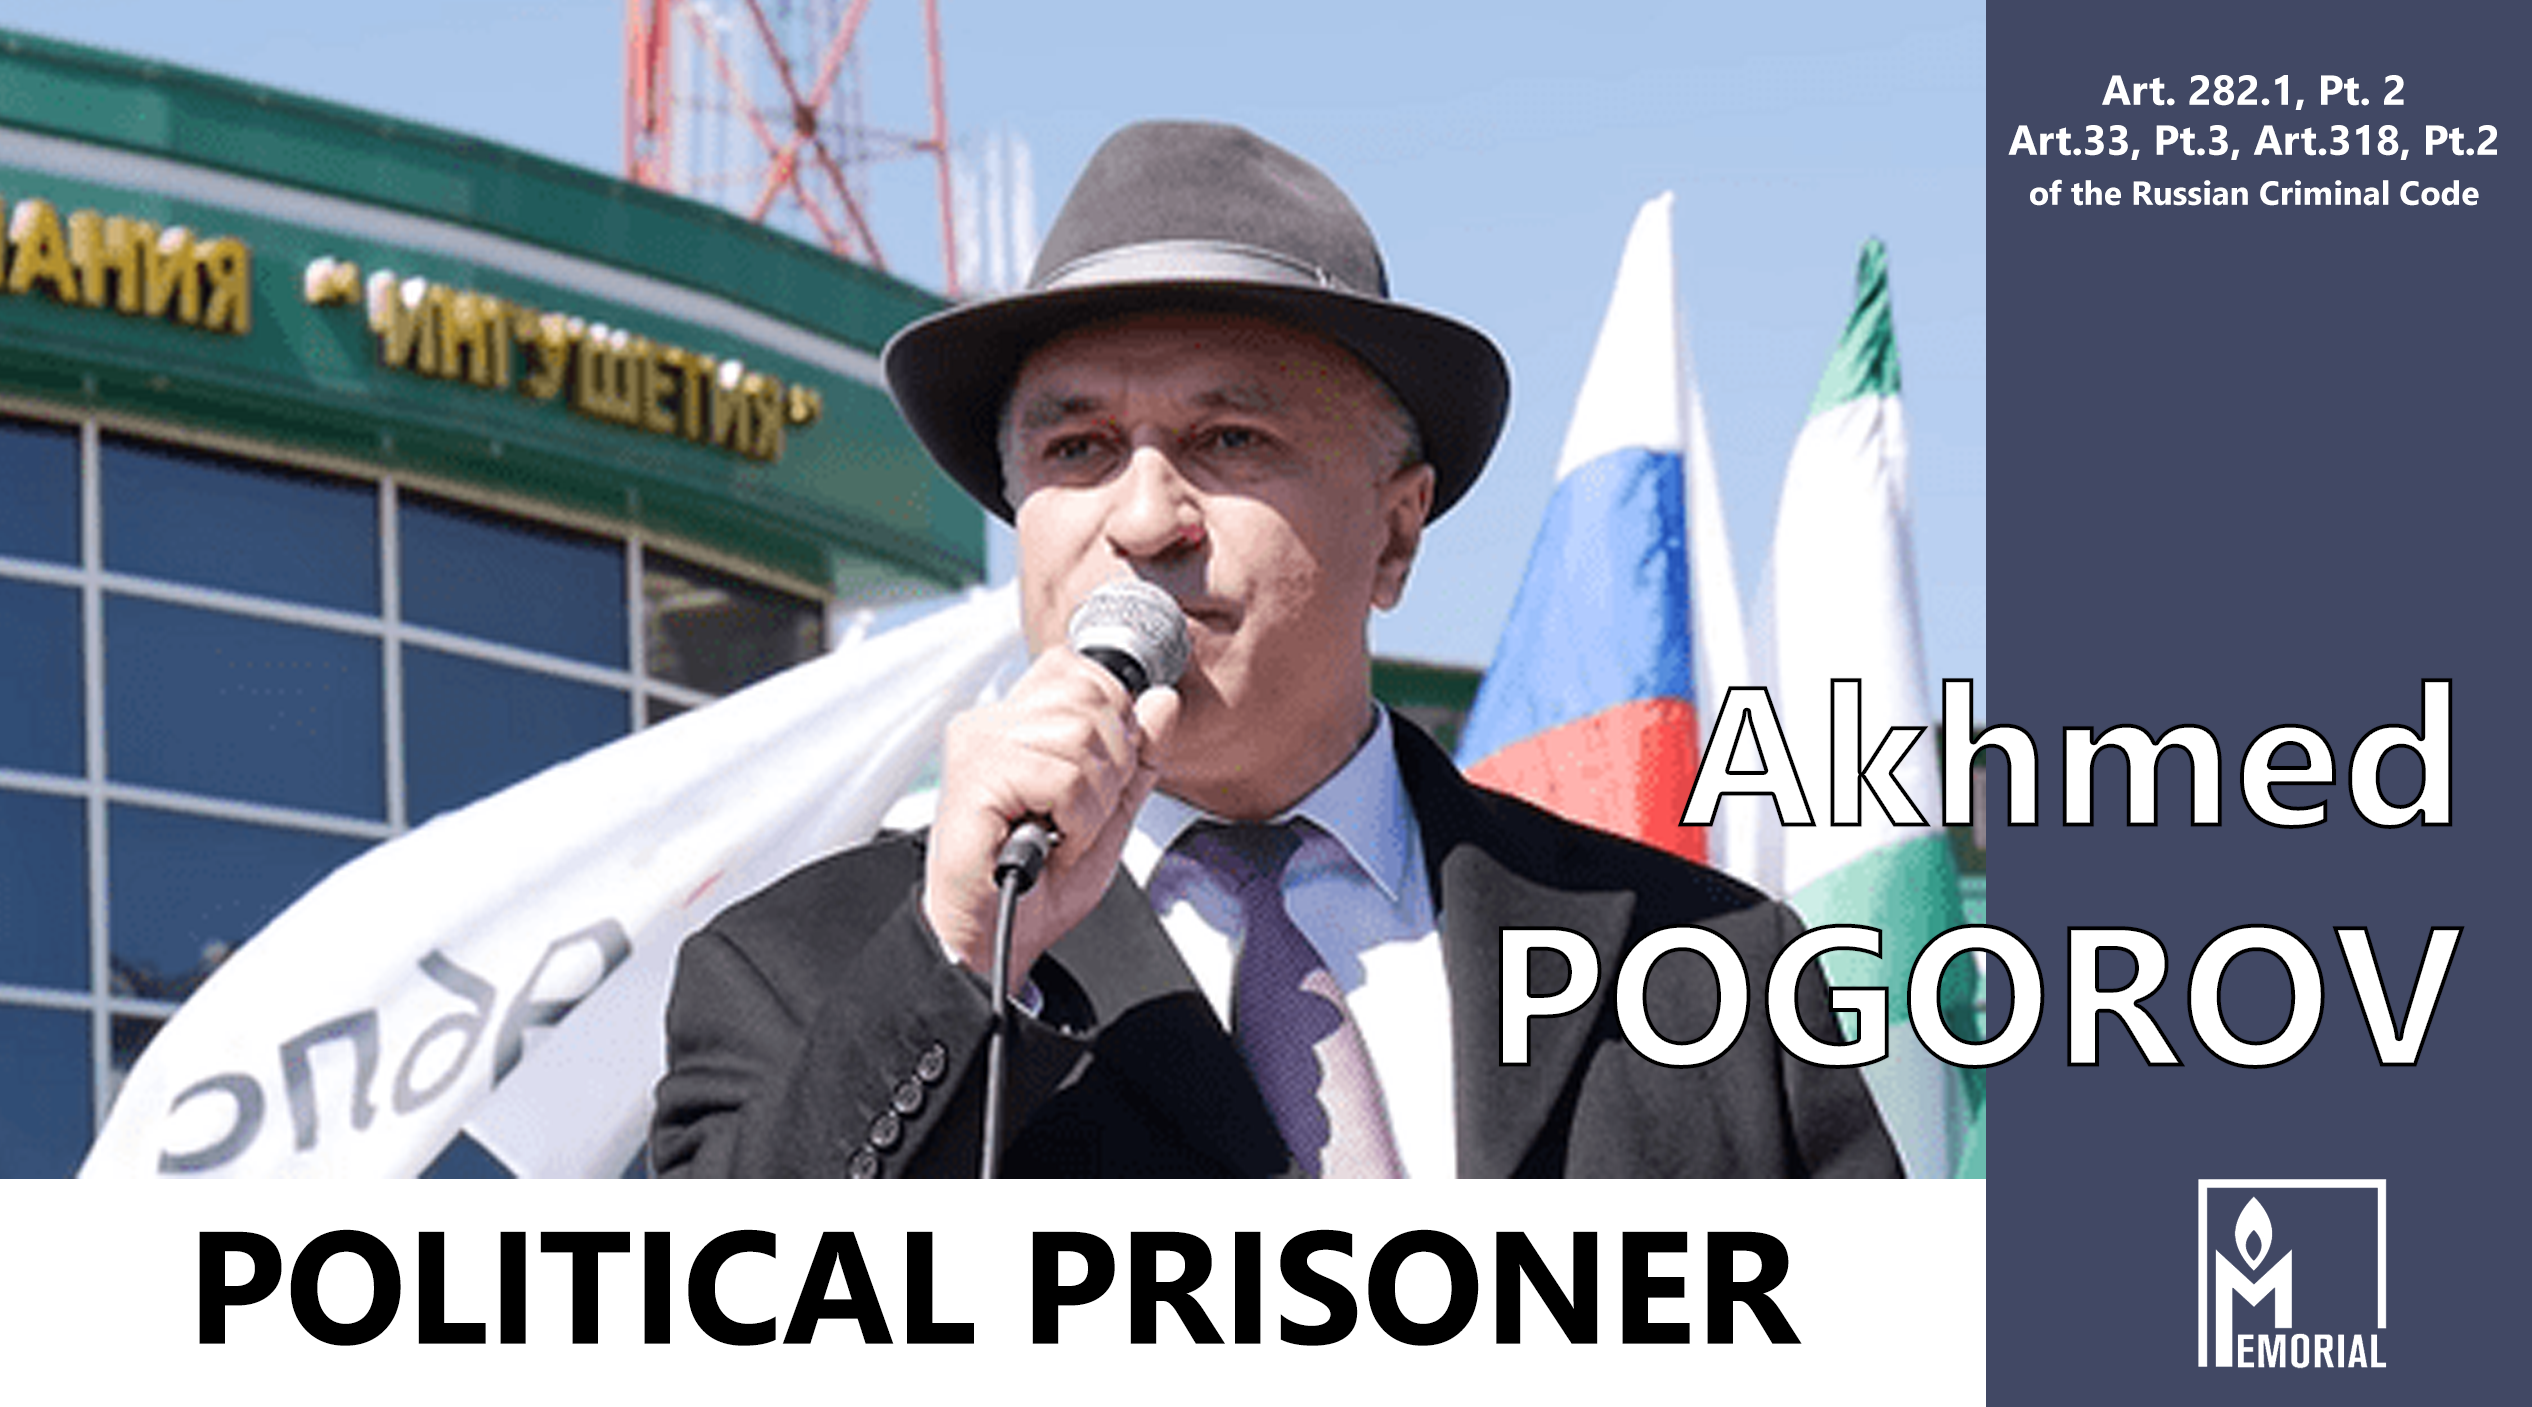 Akhmed Pogorov, a protest leader in Ingushetia, is a political prisoner